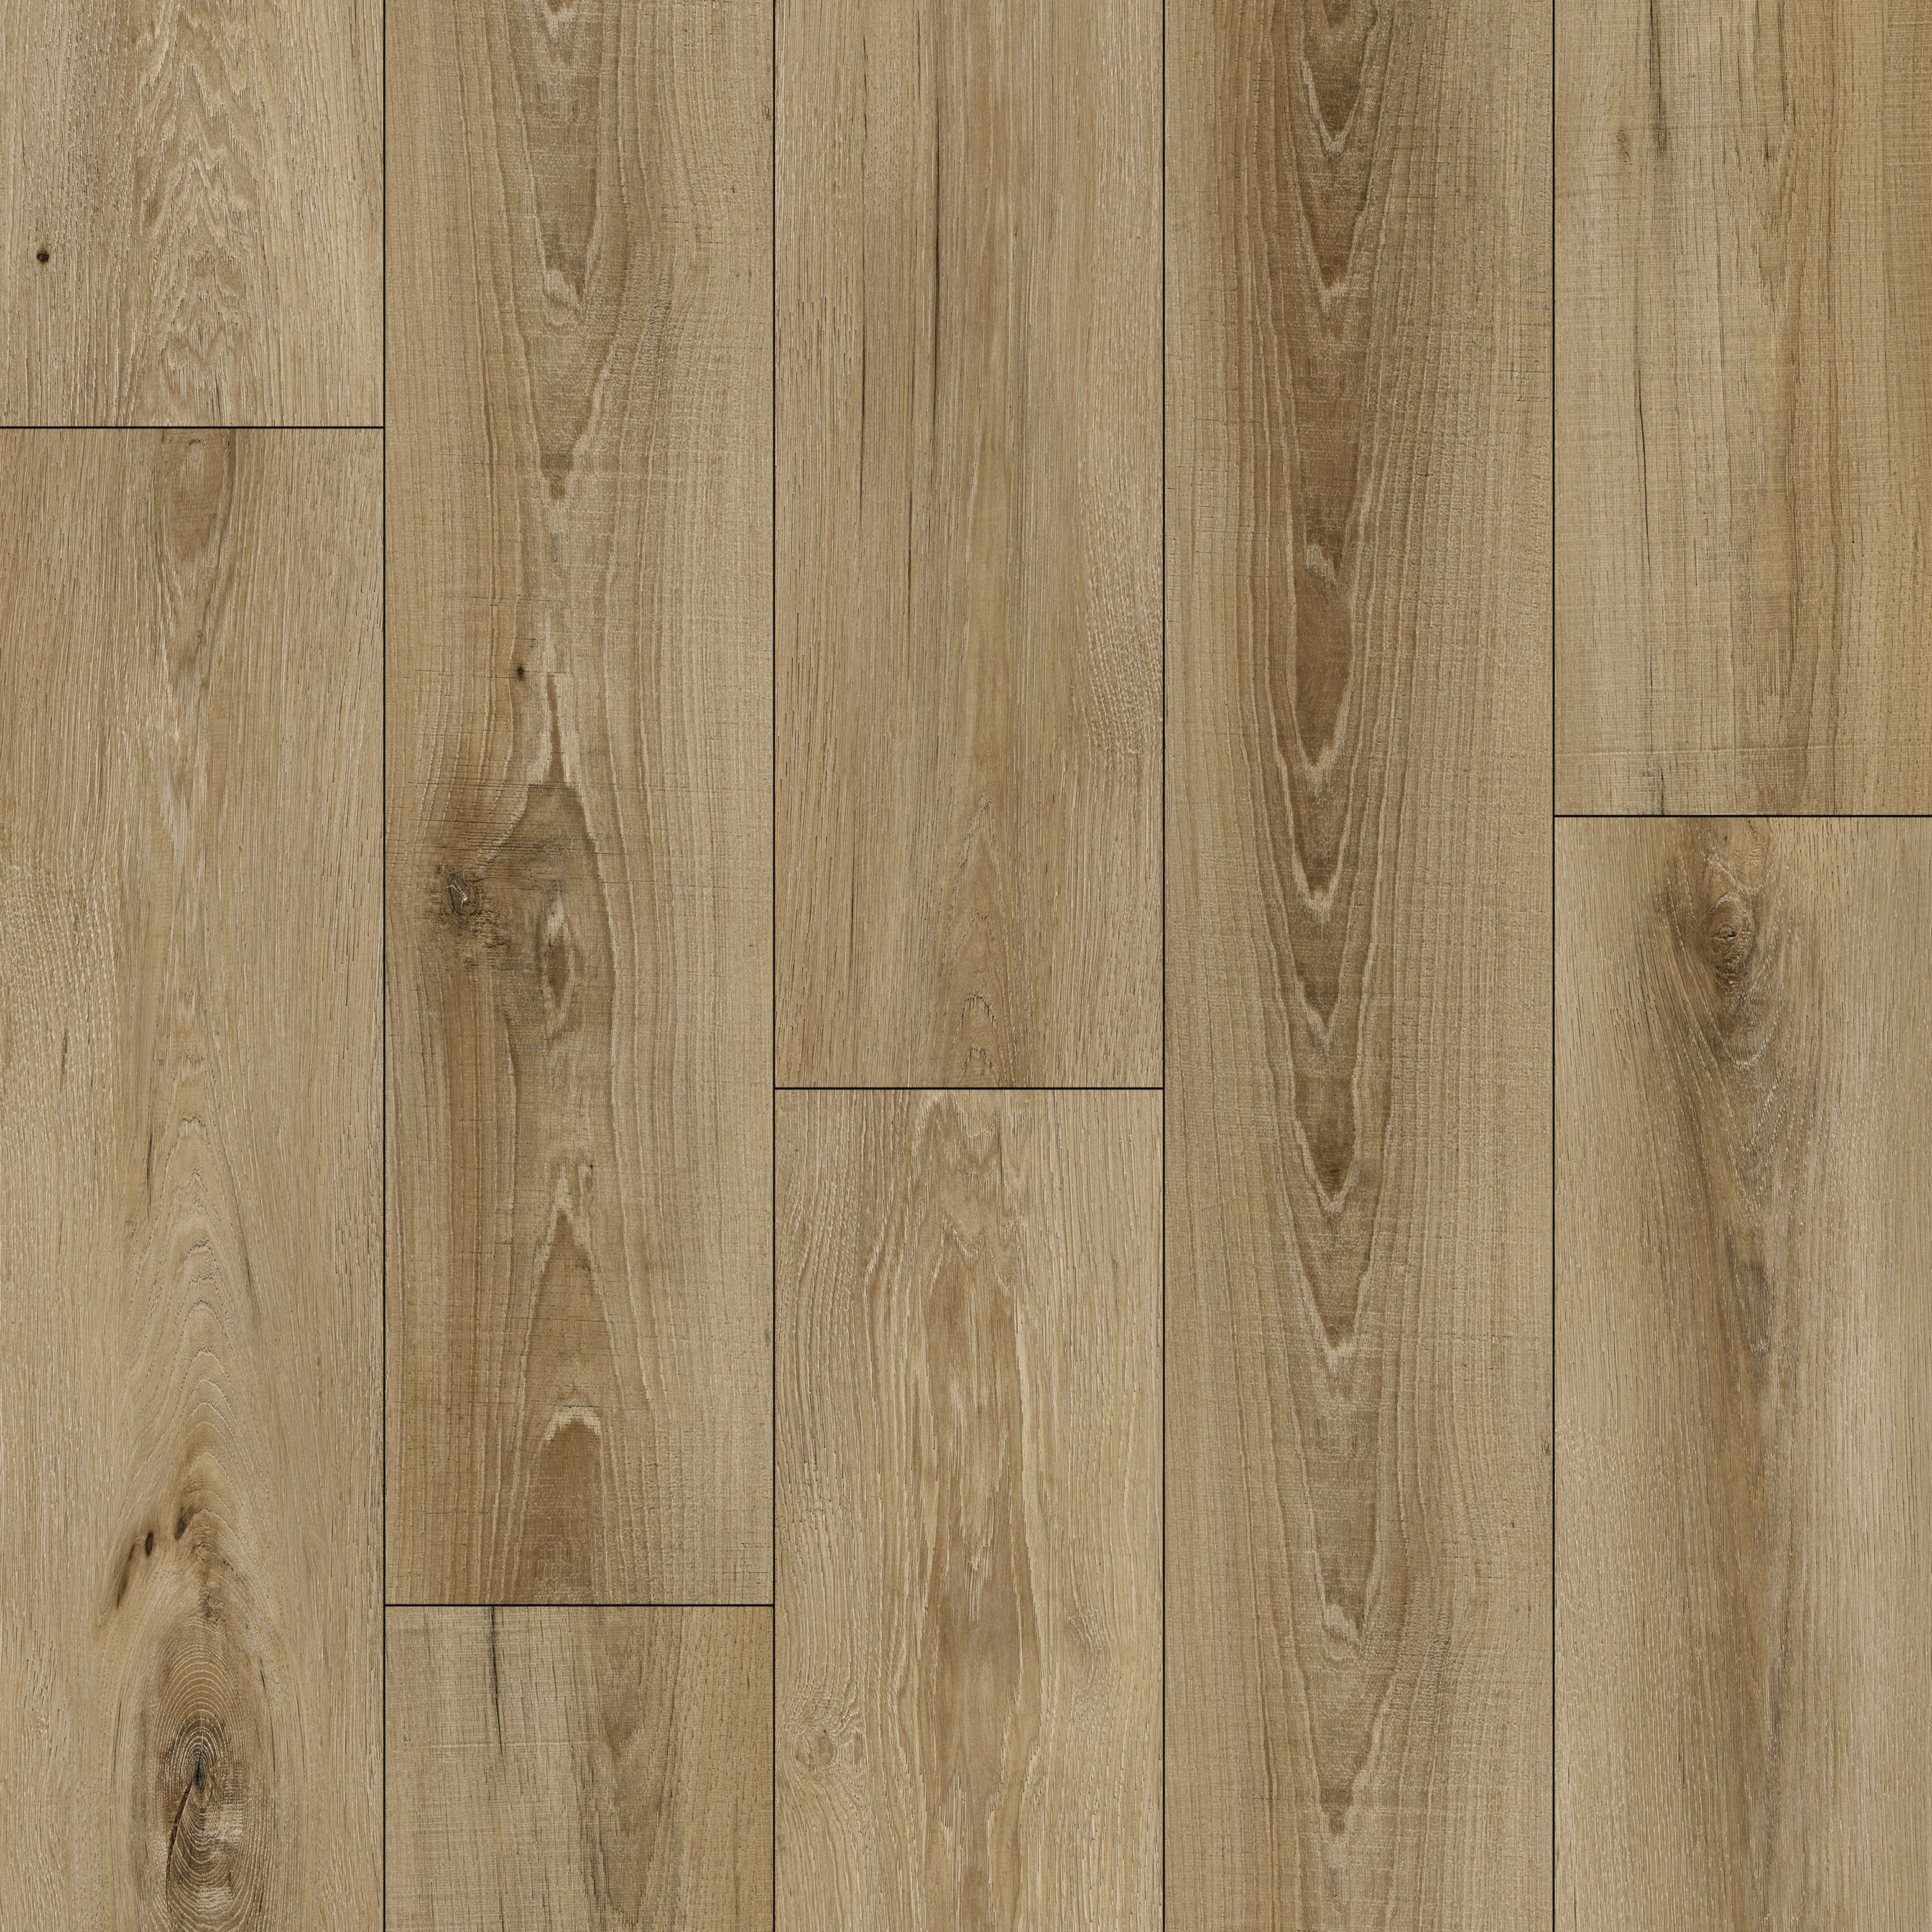 PriceList for Bamboo Flooring Clearance -
 Free Sample SPC Click Floorings Waterproof Thickness PVC Flooring Commercial Wooden PVC Vinyl Flooring – Kangton